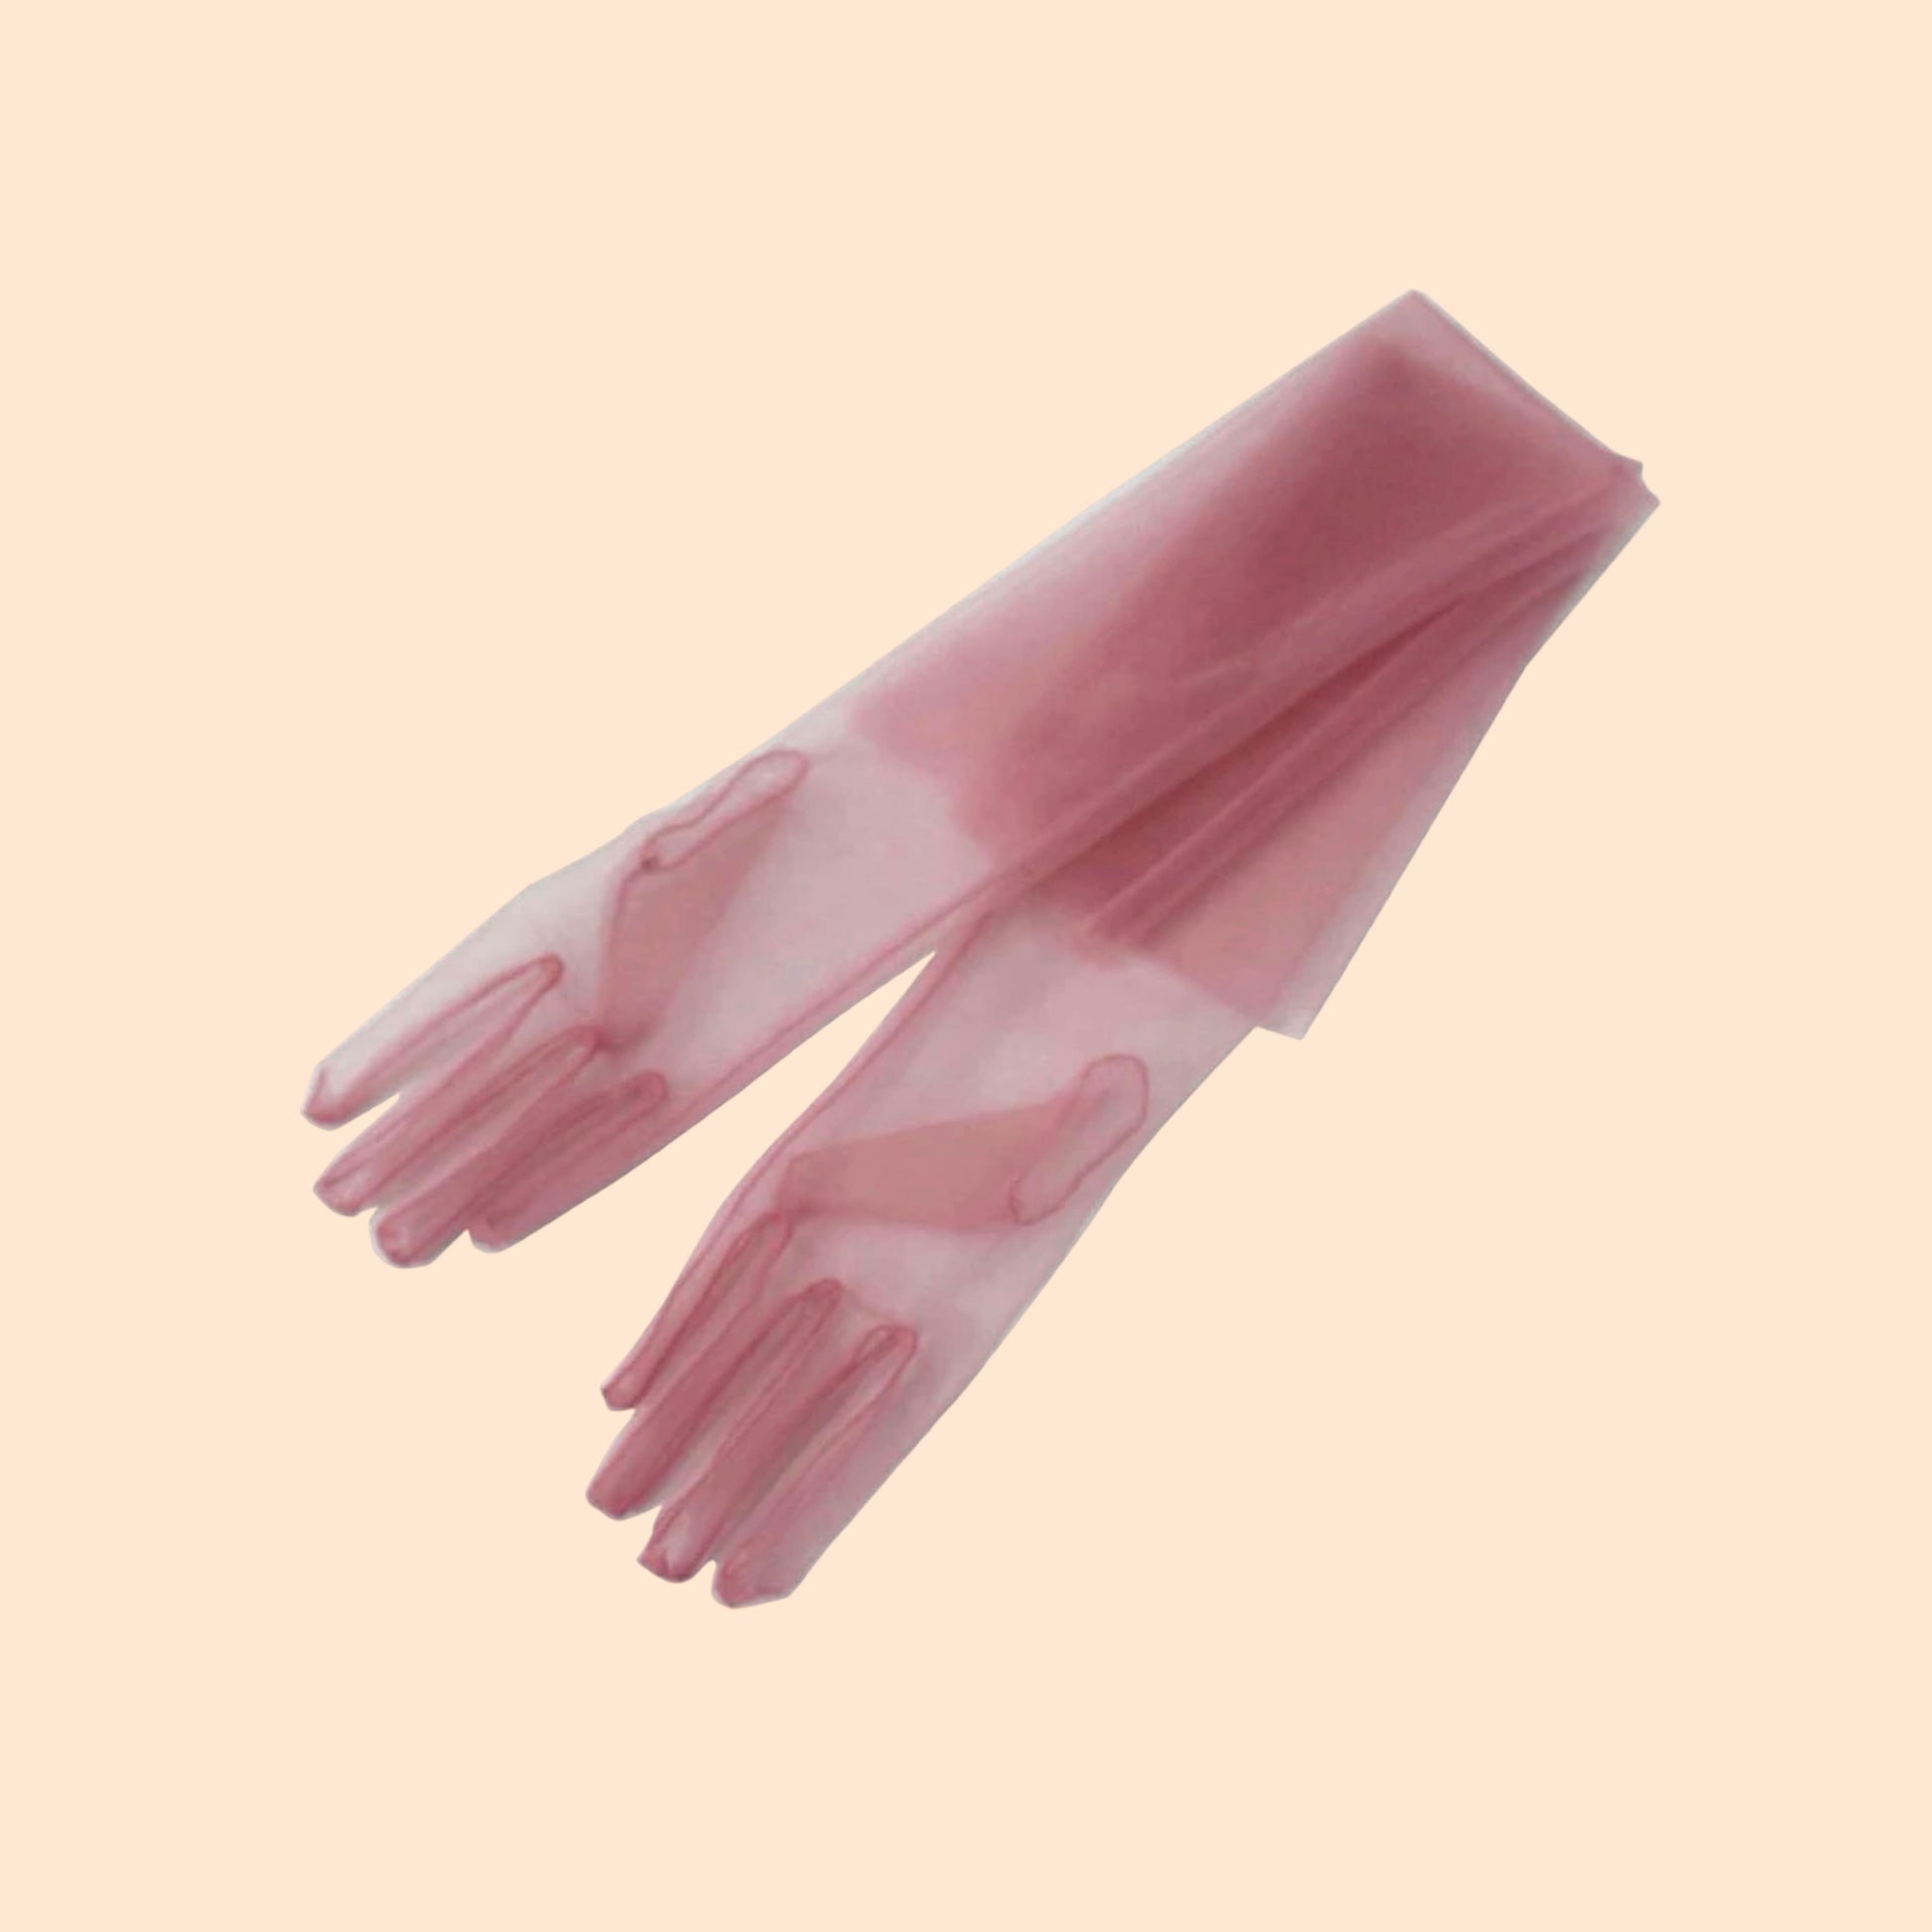 Sheer mesh dusty pink gloves- Mauve color tulle gloves